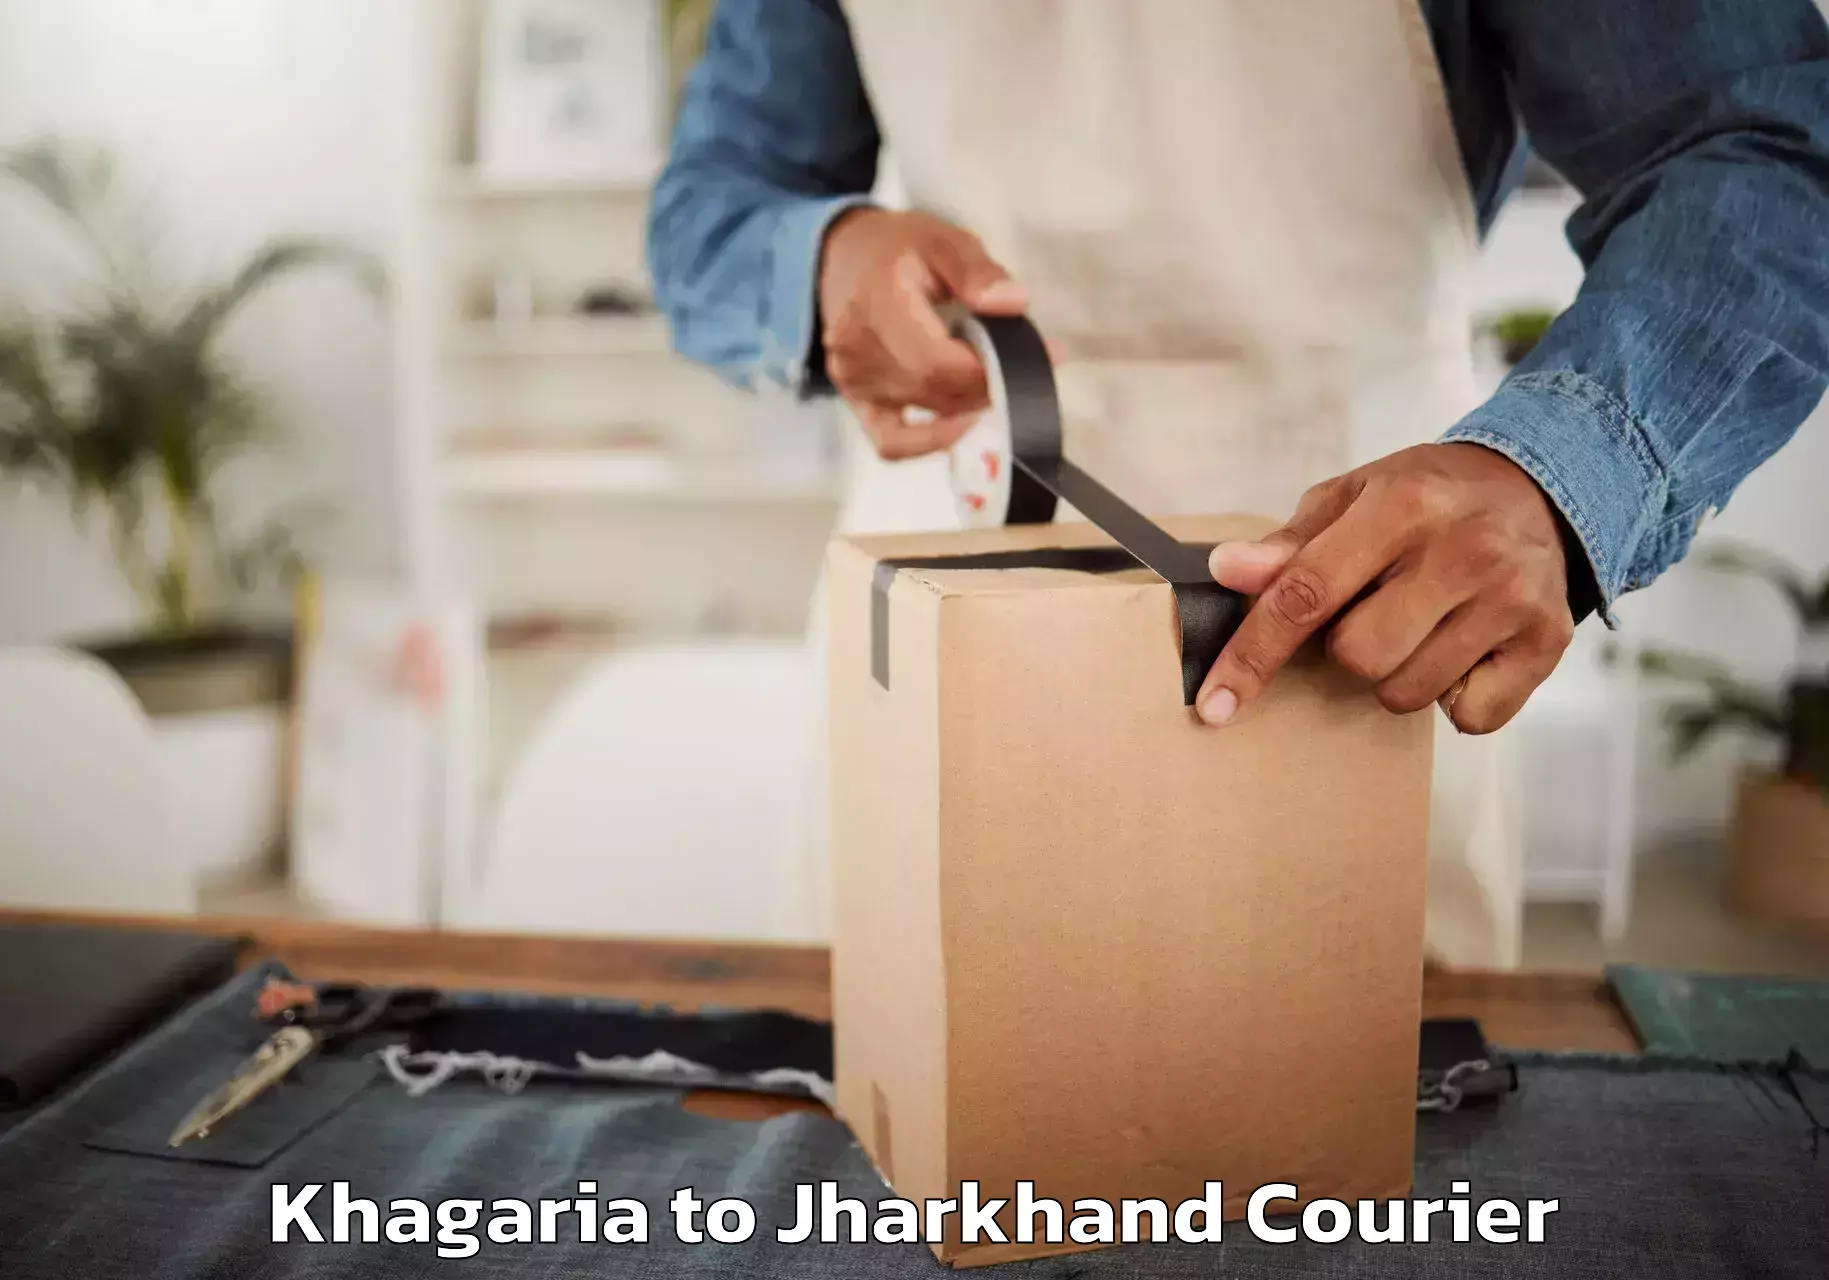 Furniture transport professionals Khagaria to Ranchi